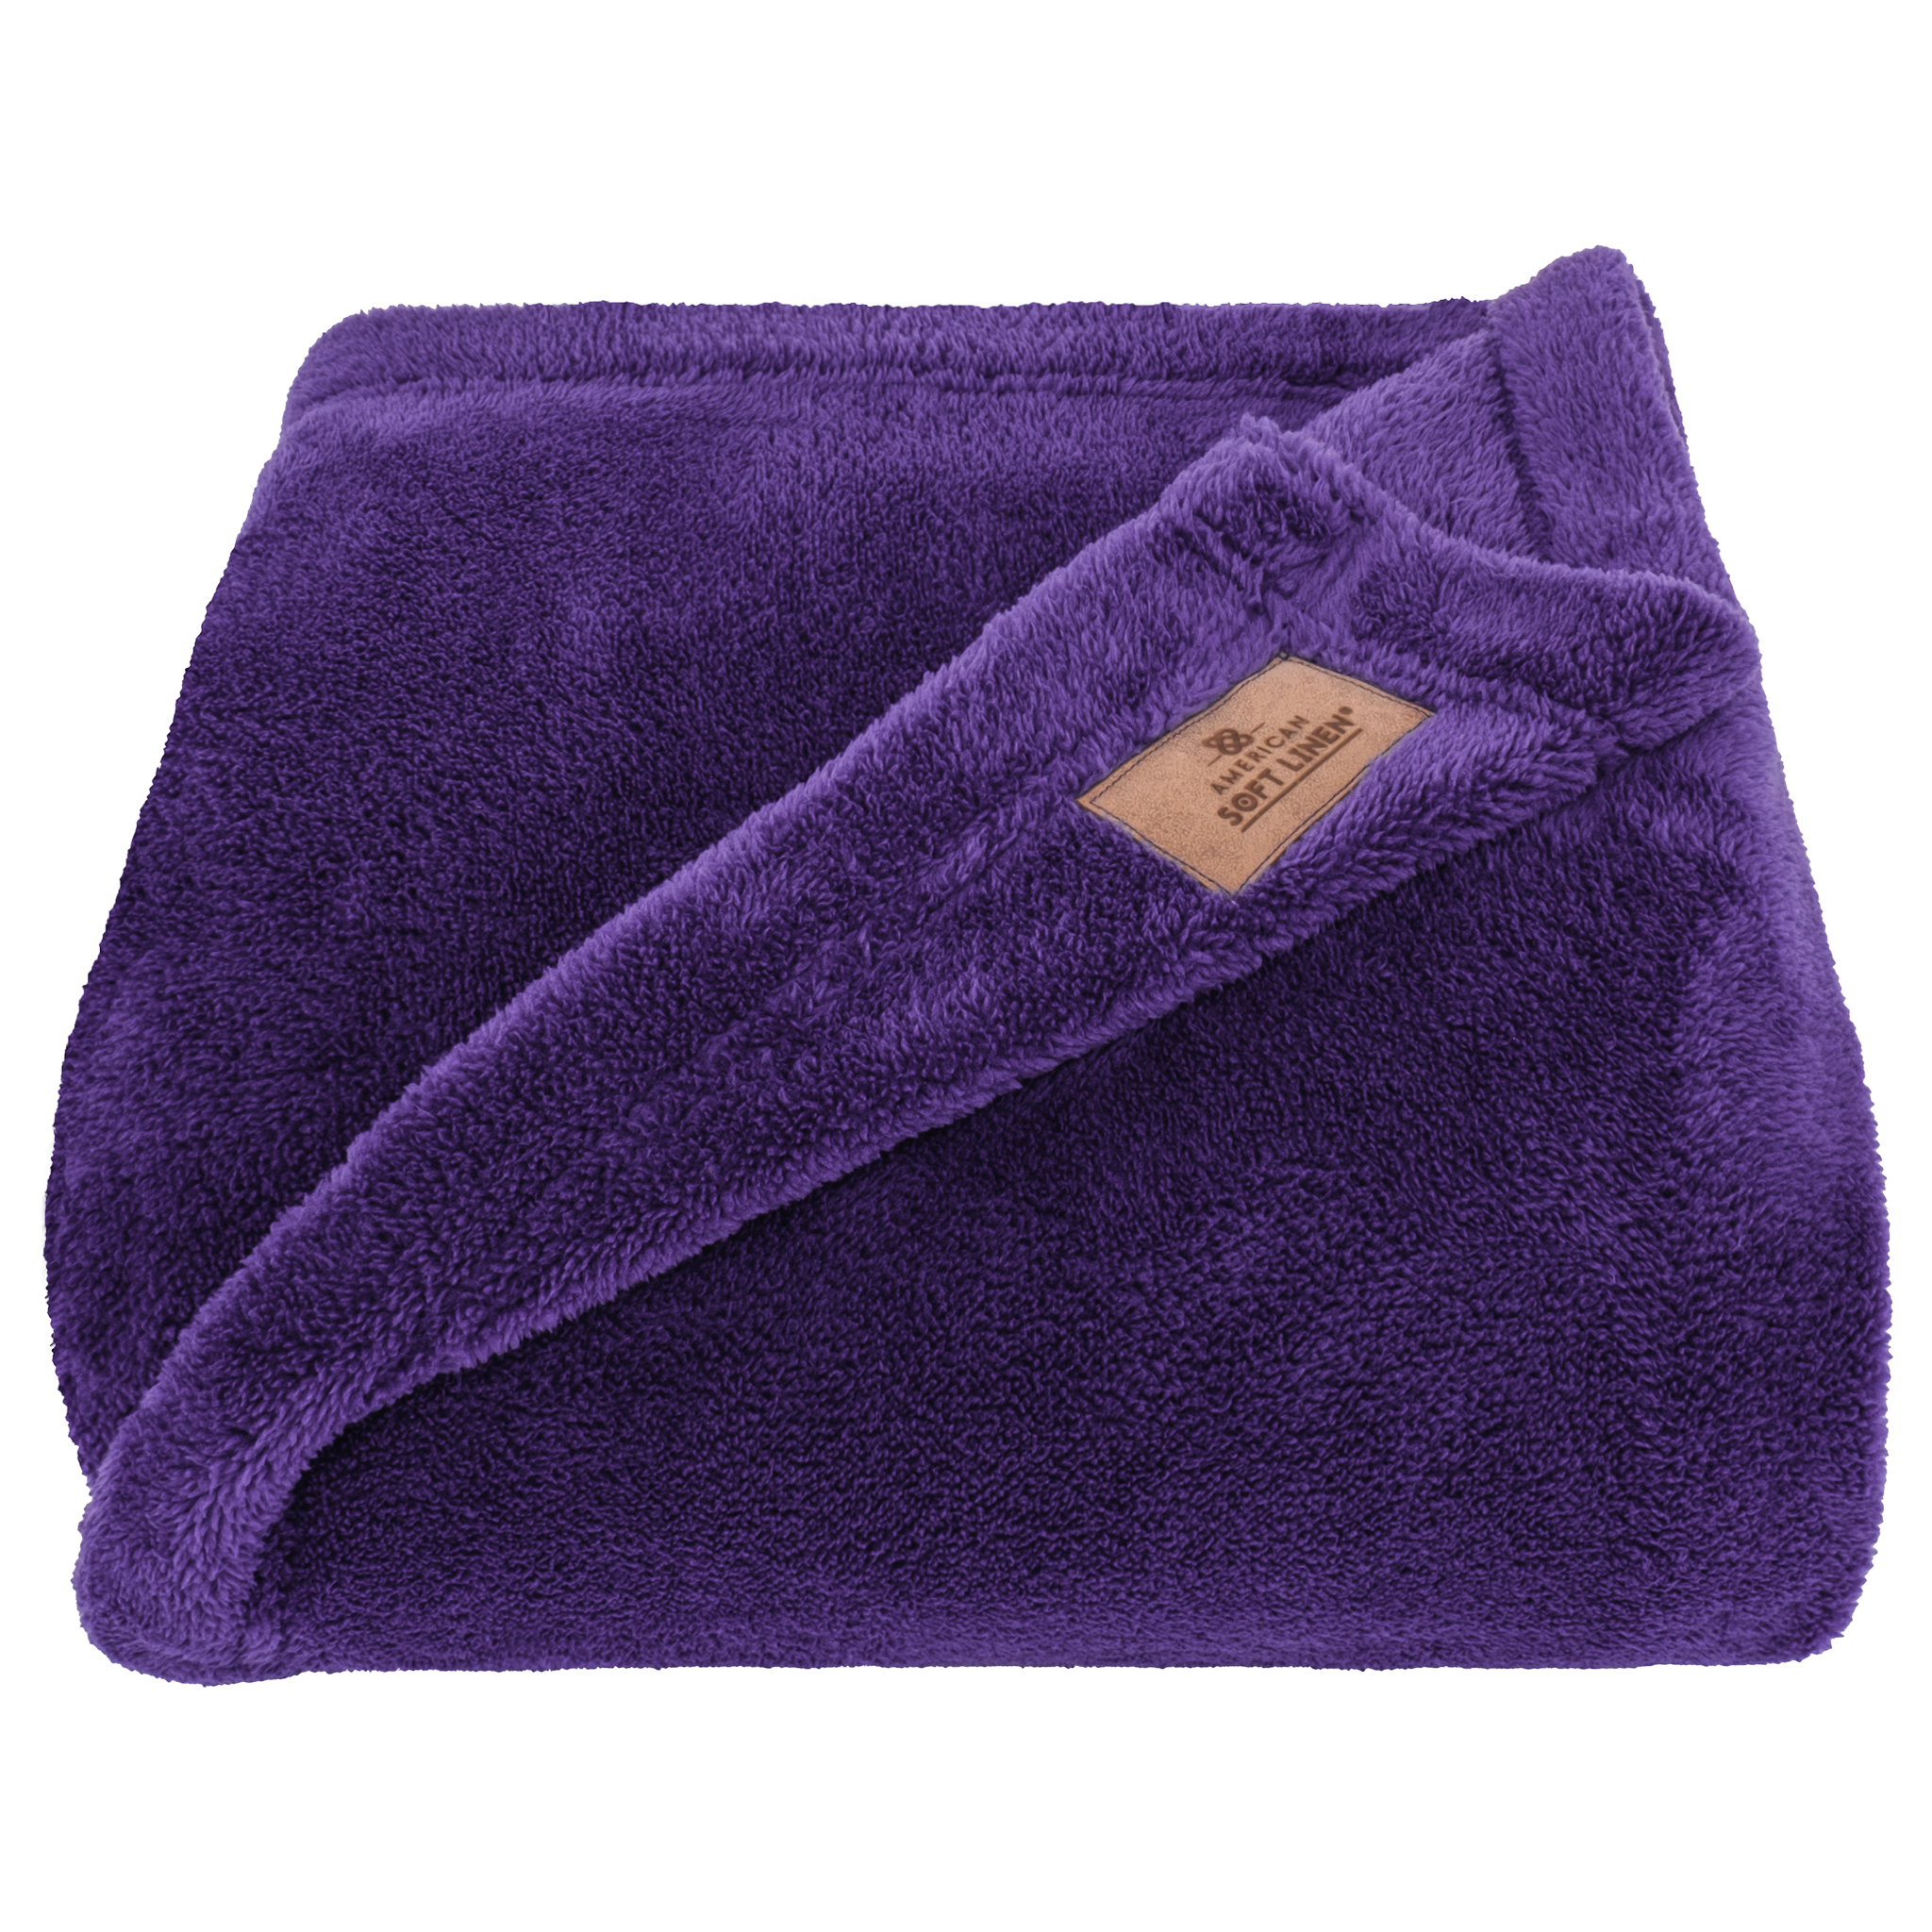 American Soft Linen - Bedding Fleece Blanket - Twin Size 60x80 inches - Purple - 3